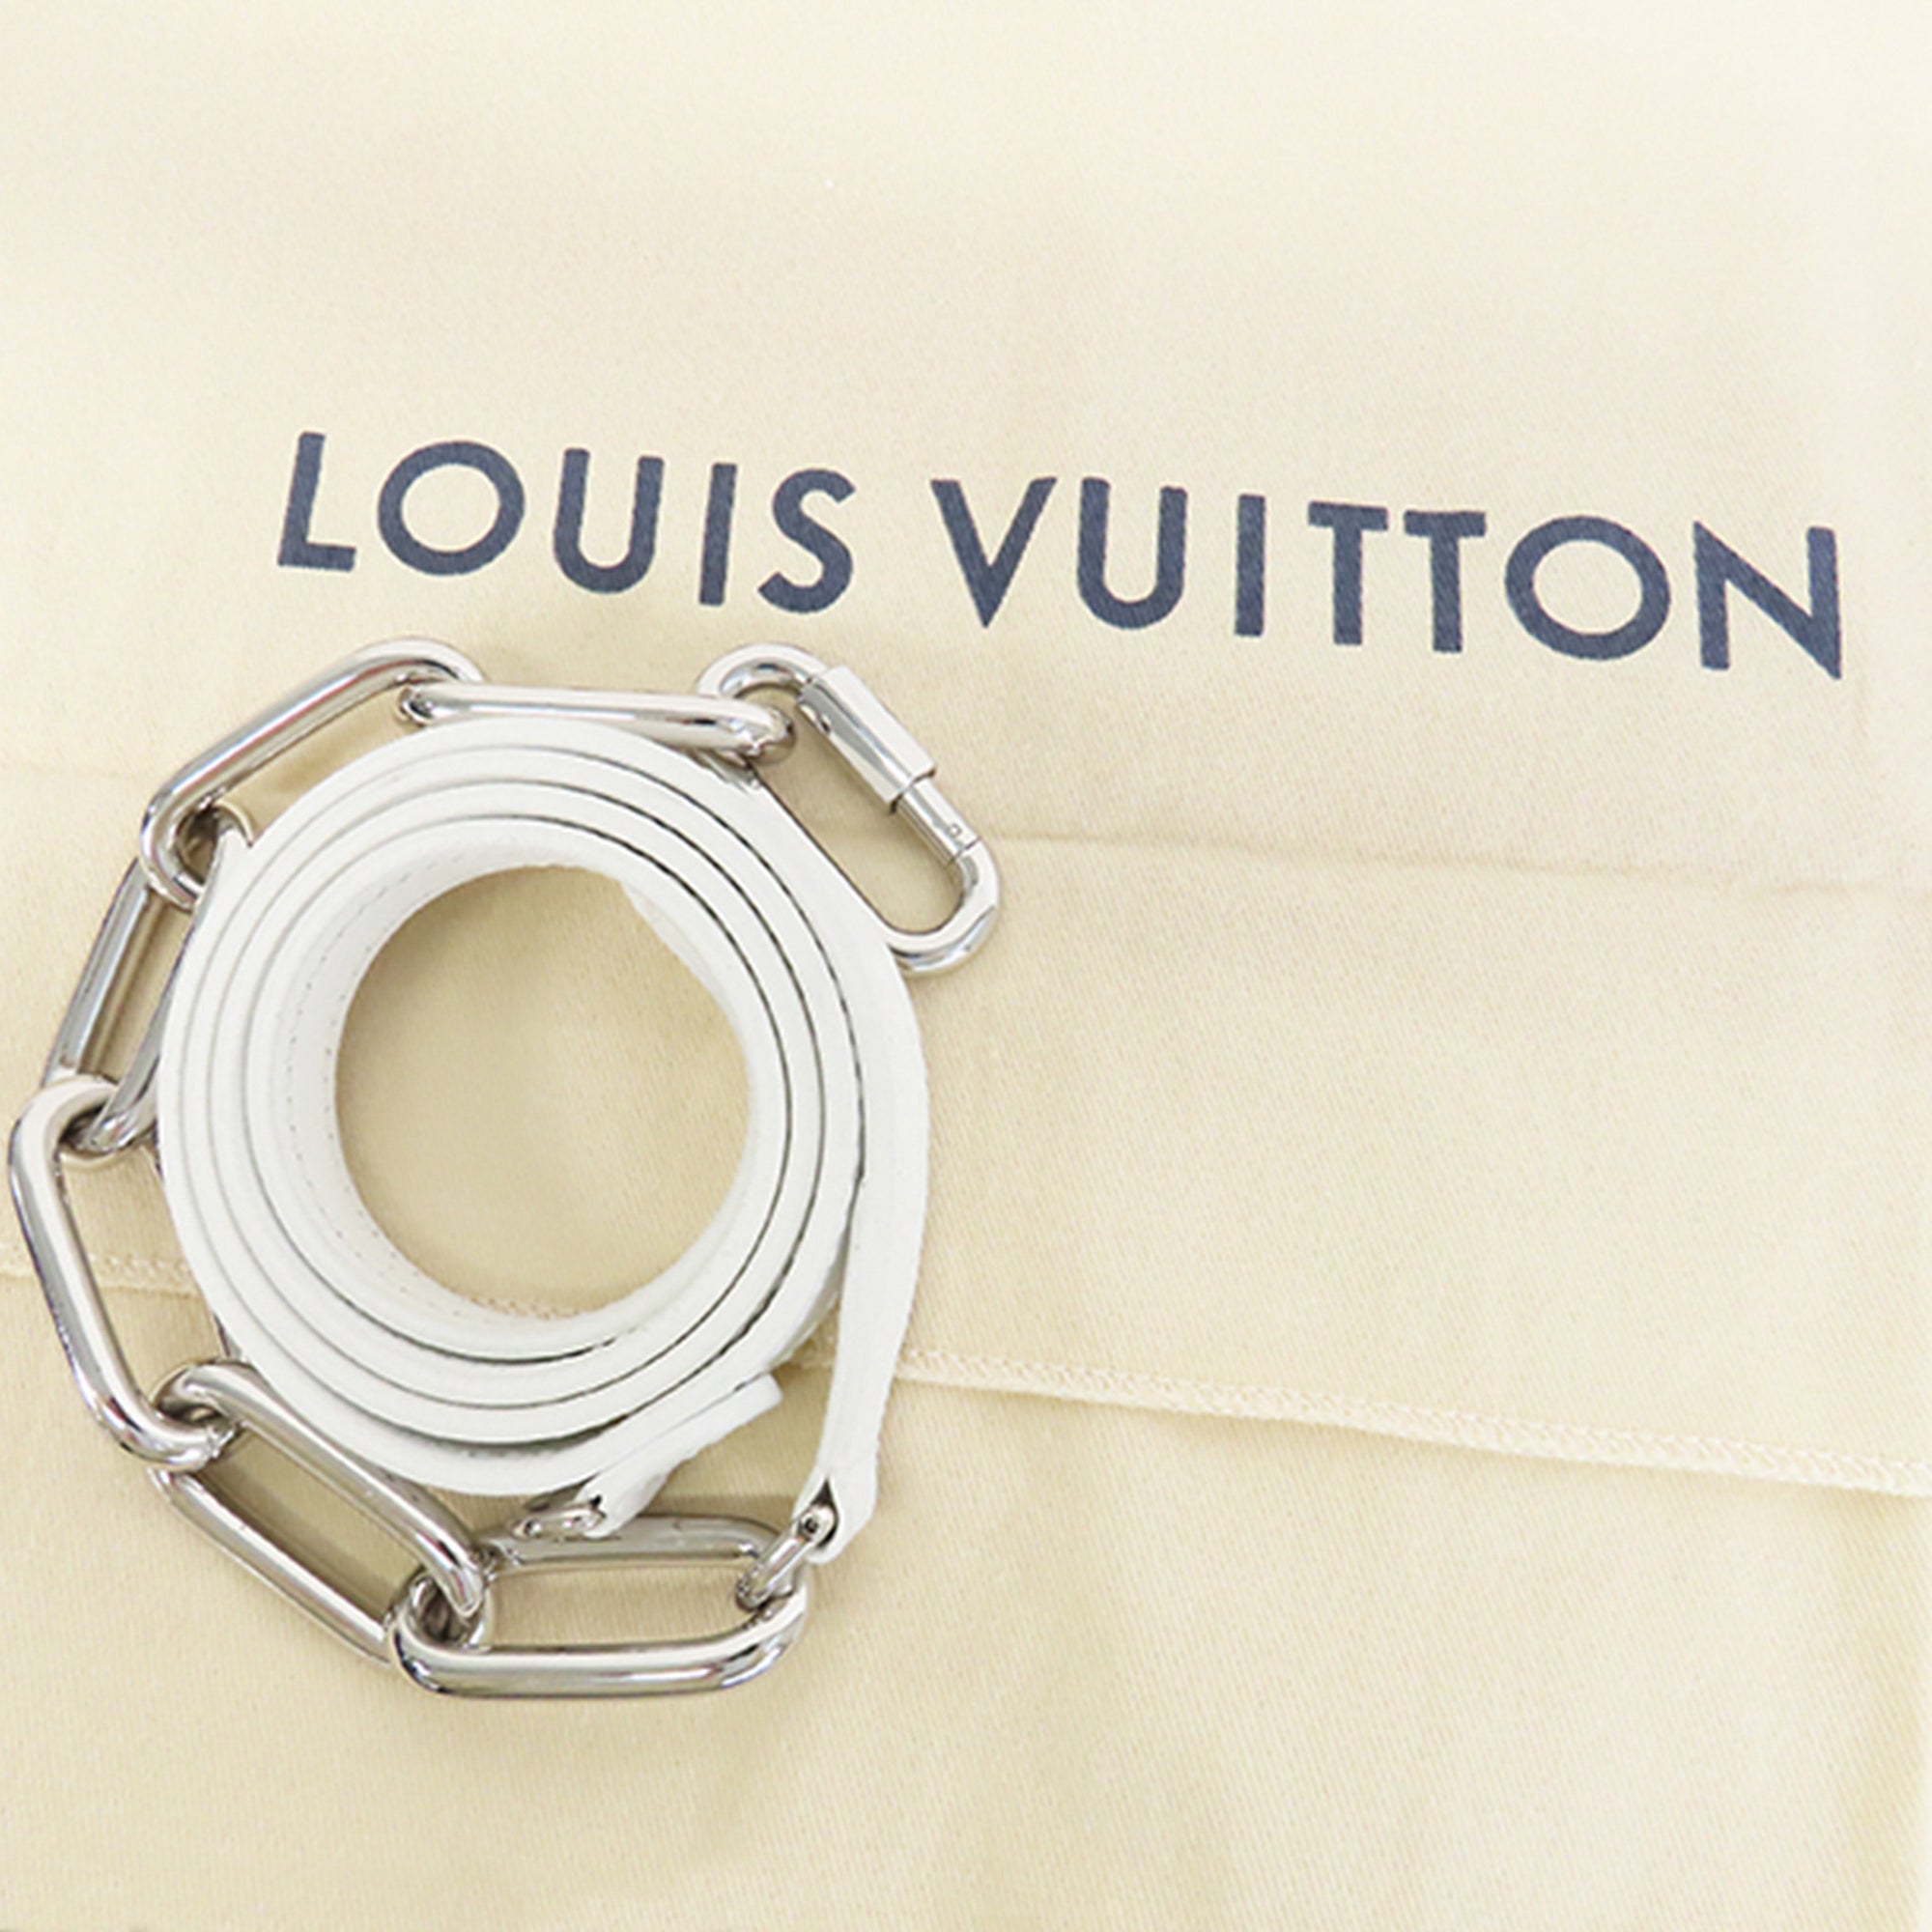 Authentic LOUIS VUITTON Everyday LV Sac Plat XS M80841 Bag  #260-006-157-9262